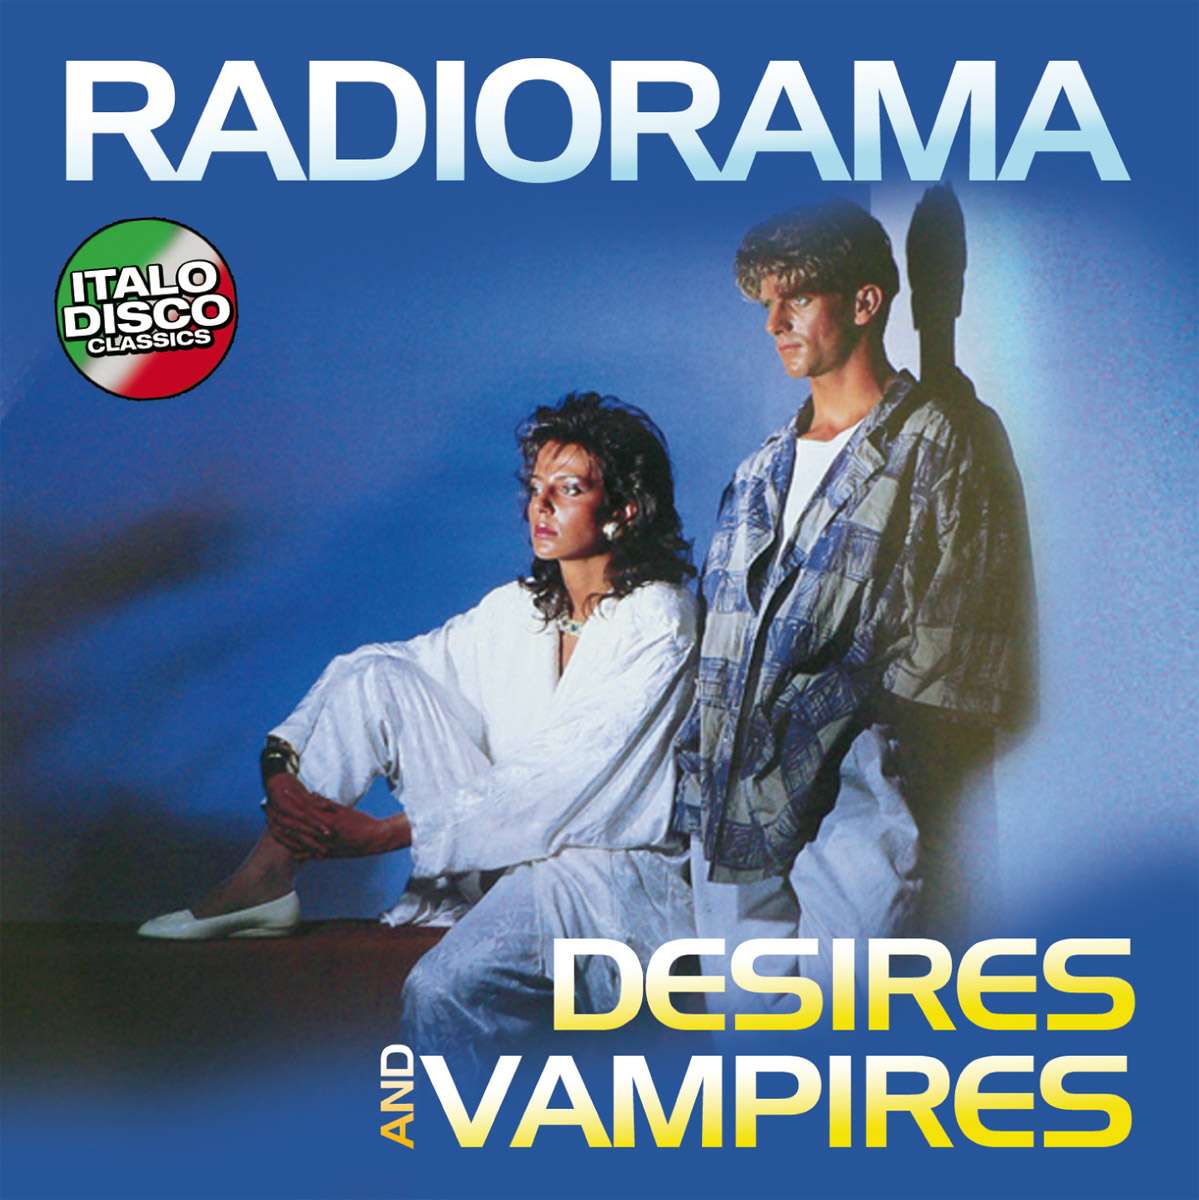 Okładka płyty winylowej artysty Radiorama o tytule Desires And Vampires